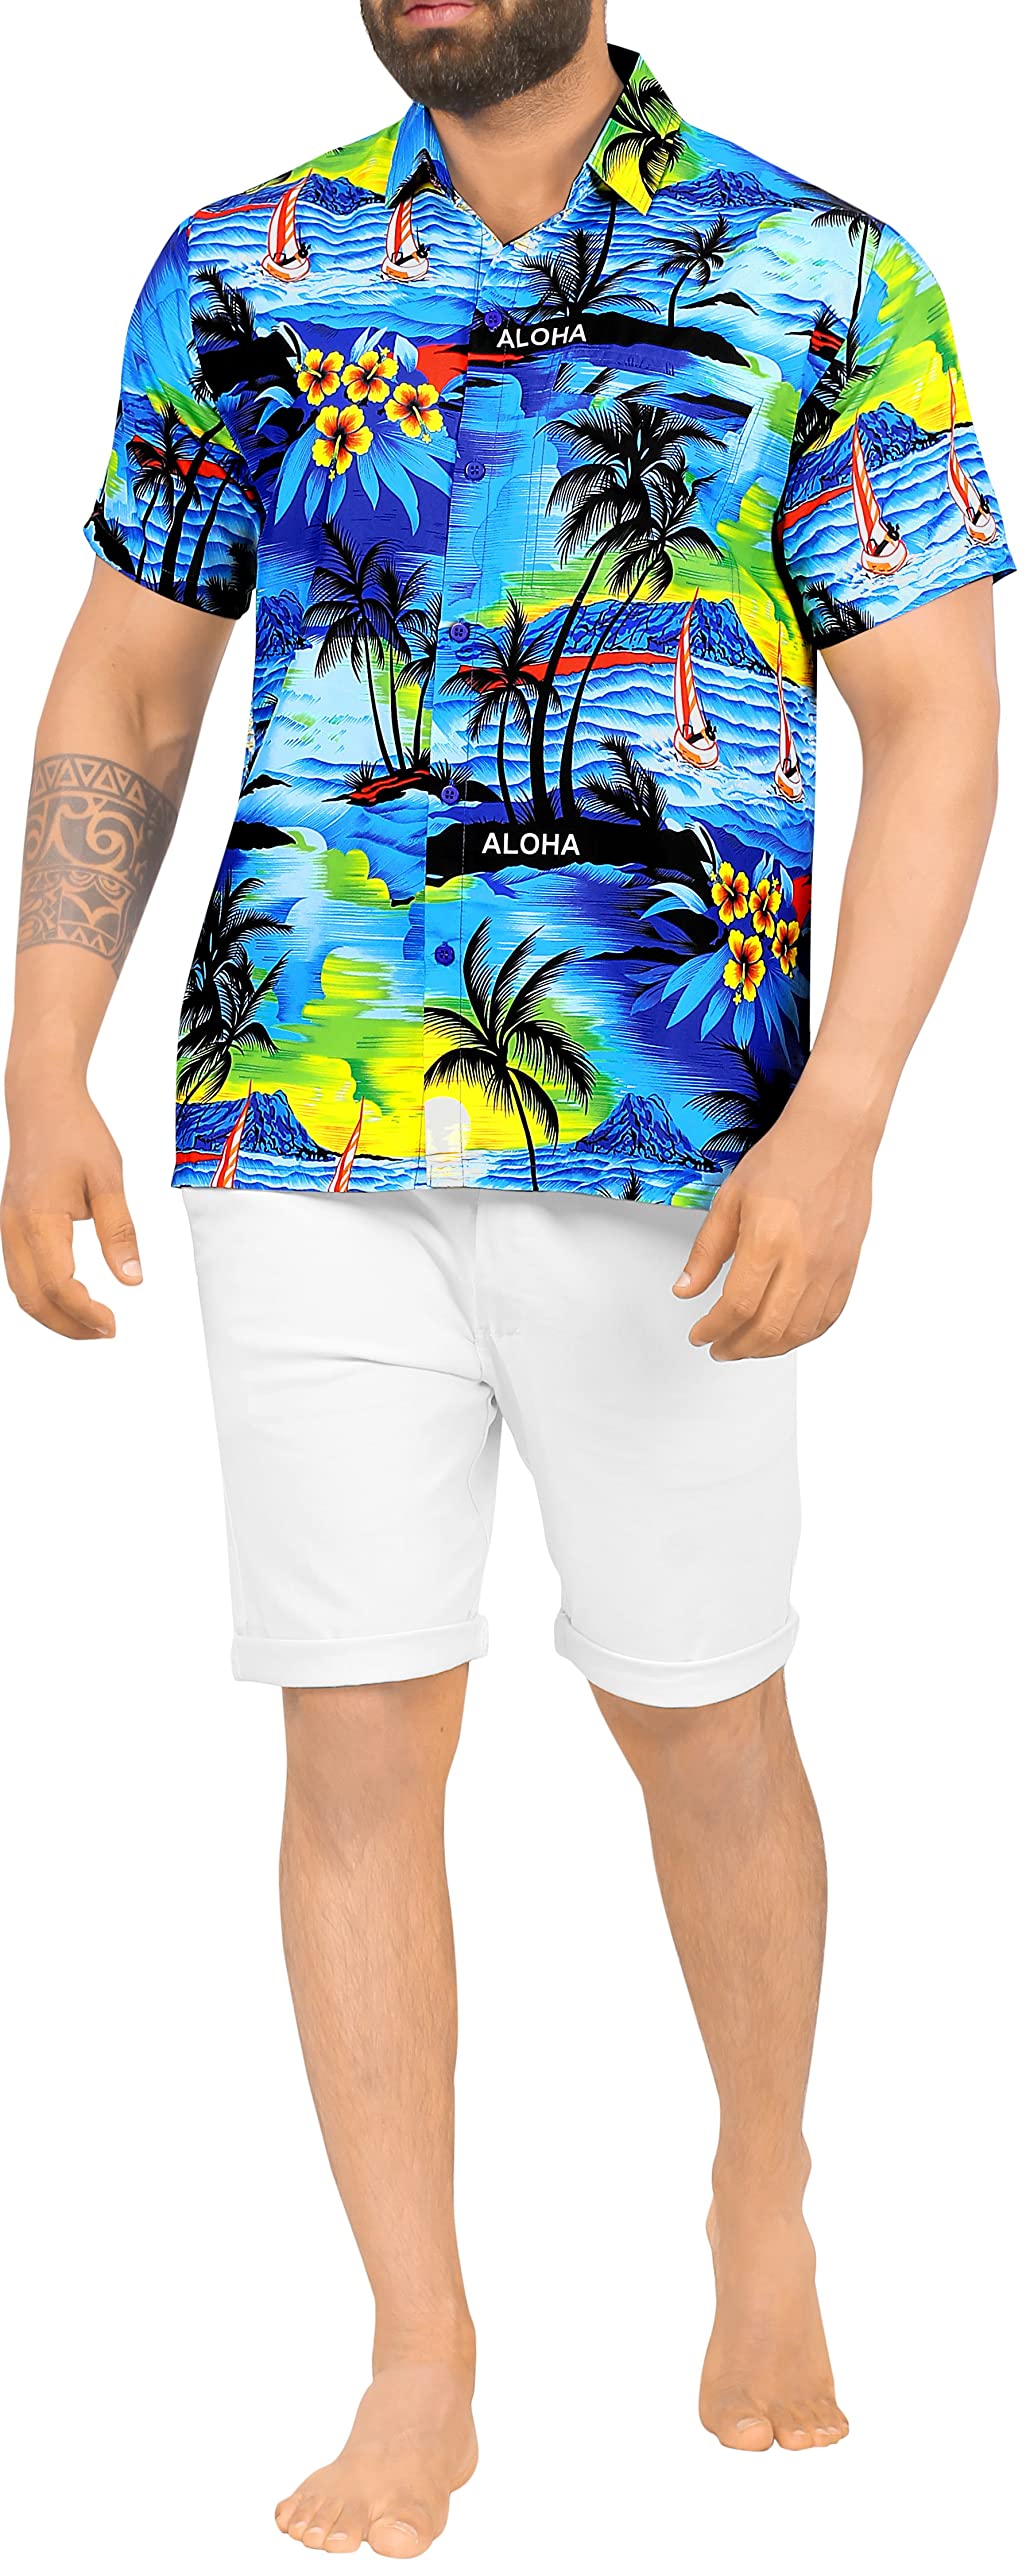 LA LEELA Men's Hawaiian Shirt Button Down Short Sleeve Caribbean Skull Pirate Shirts for Men